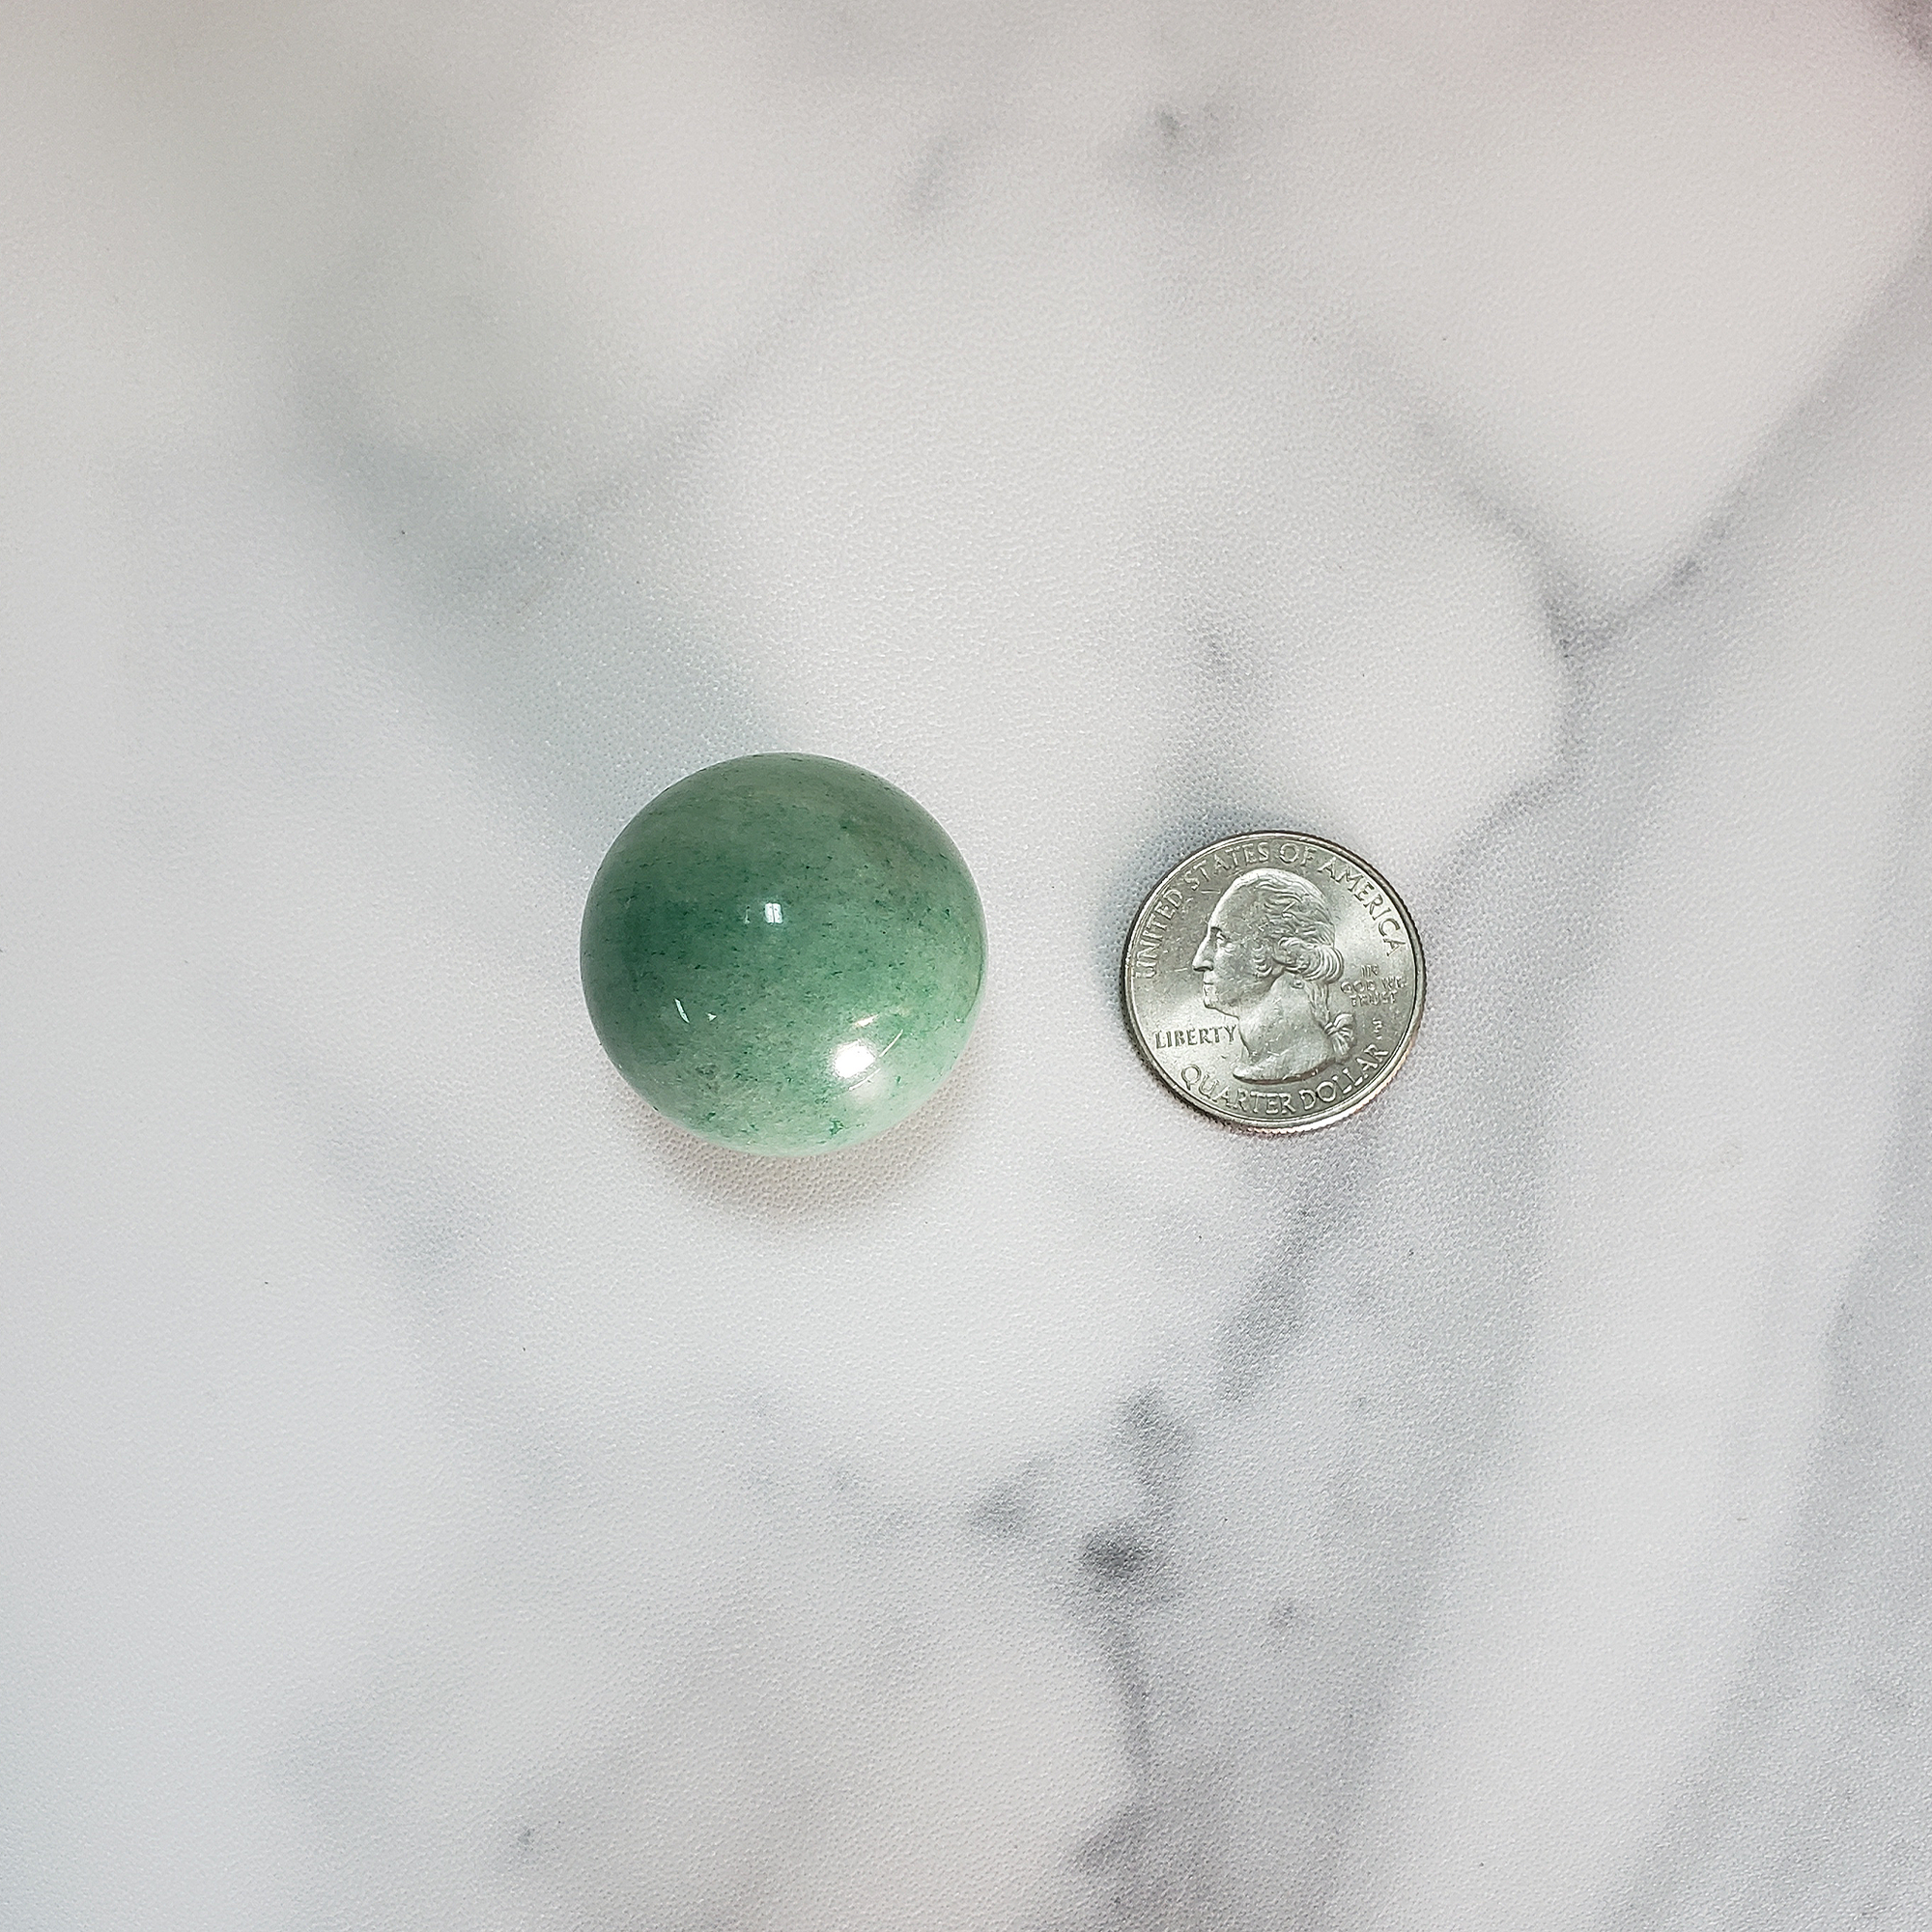 Green Aventurine Natural Crystal Sphere Gemstone Orb - One 30mm Sphere - Size Comparison